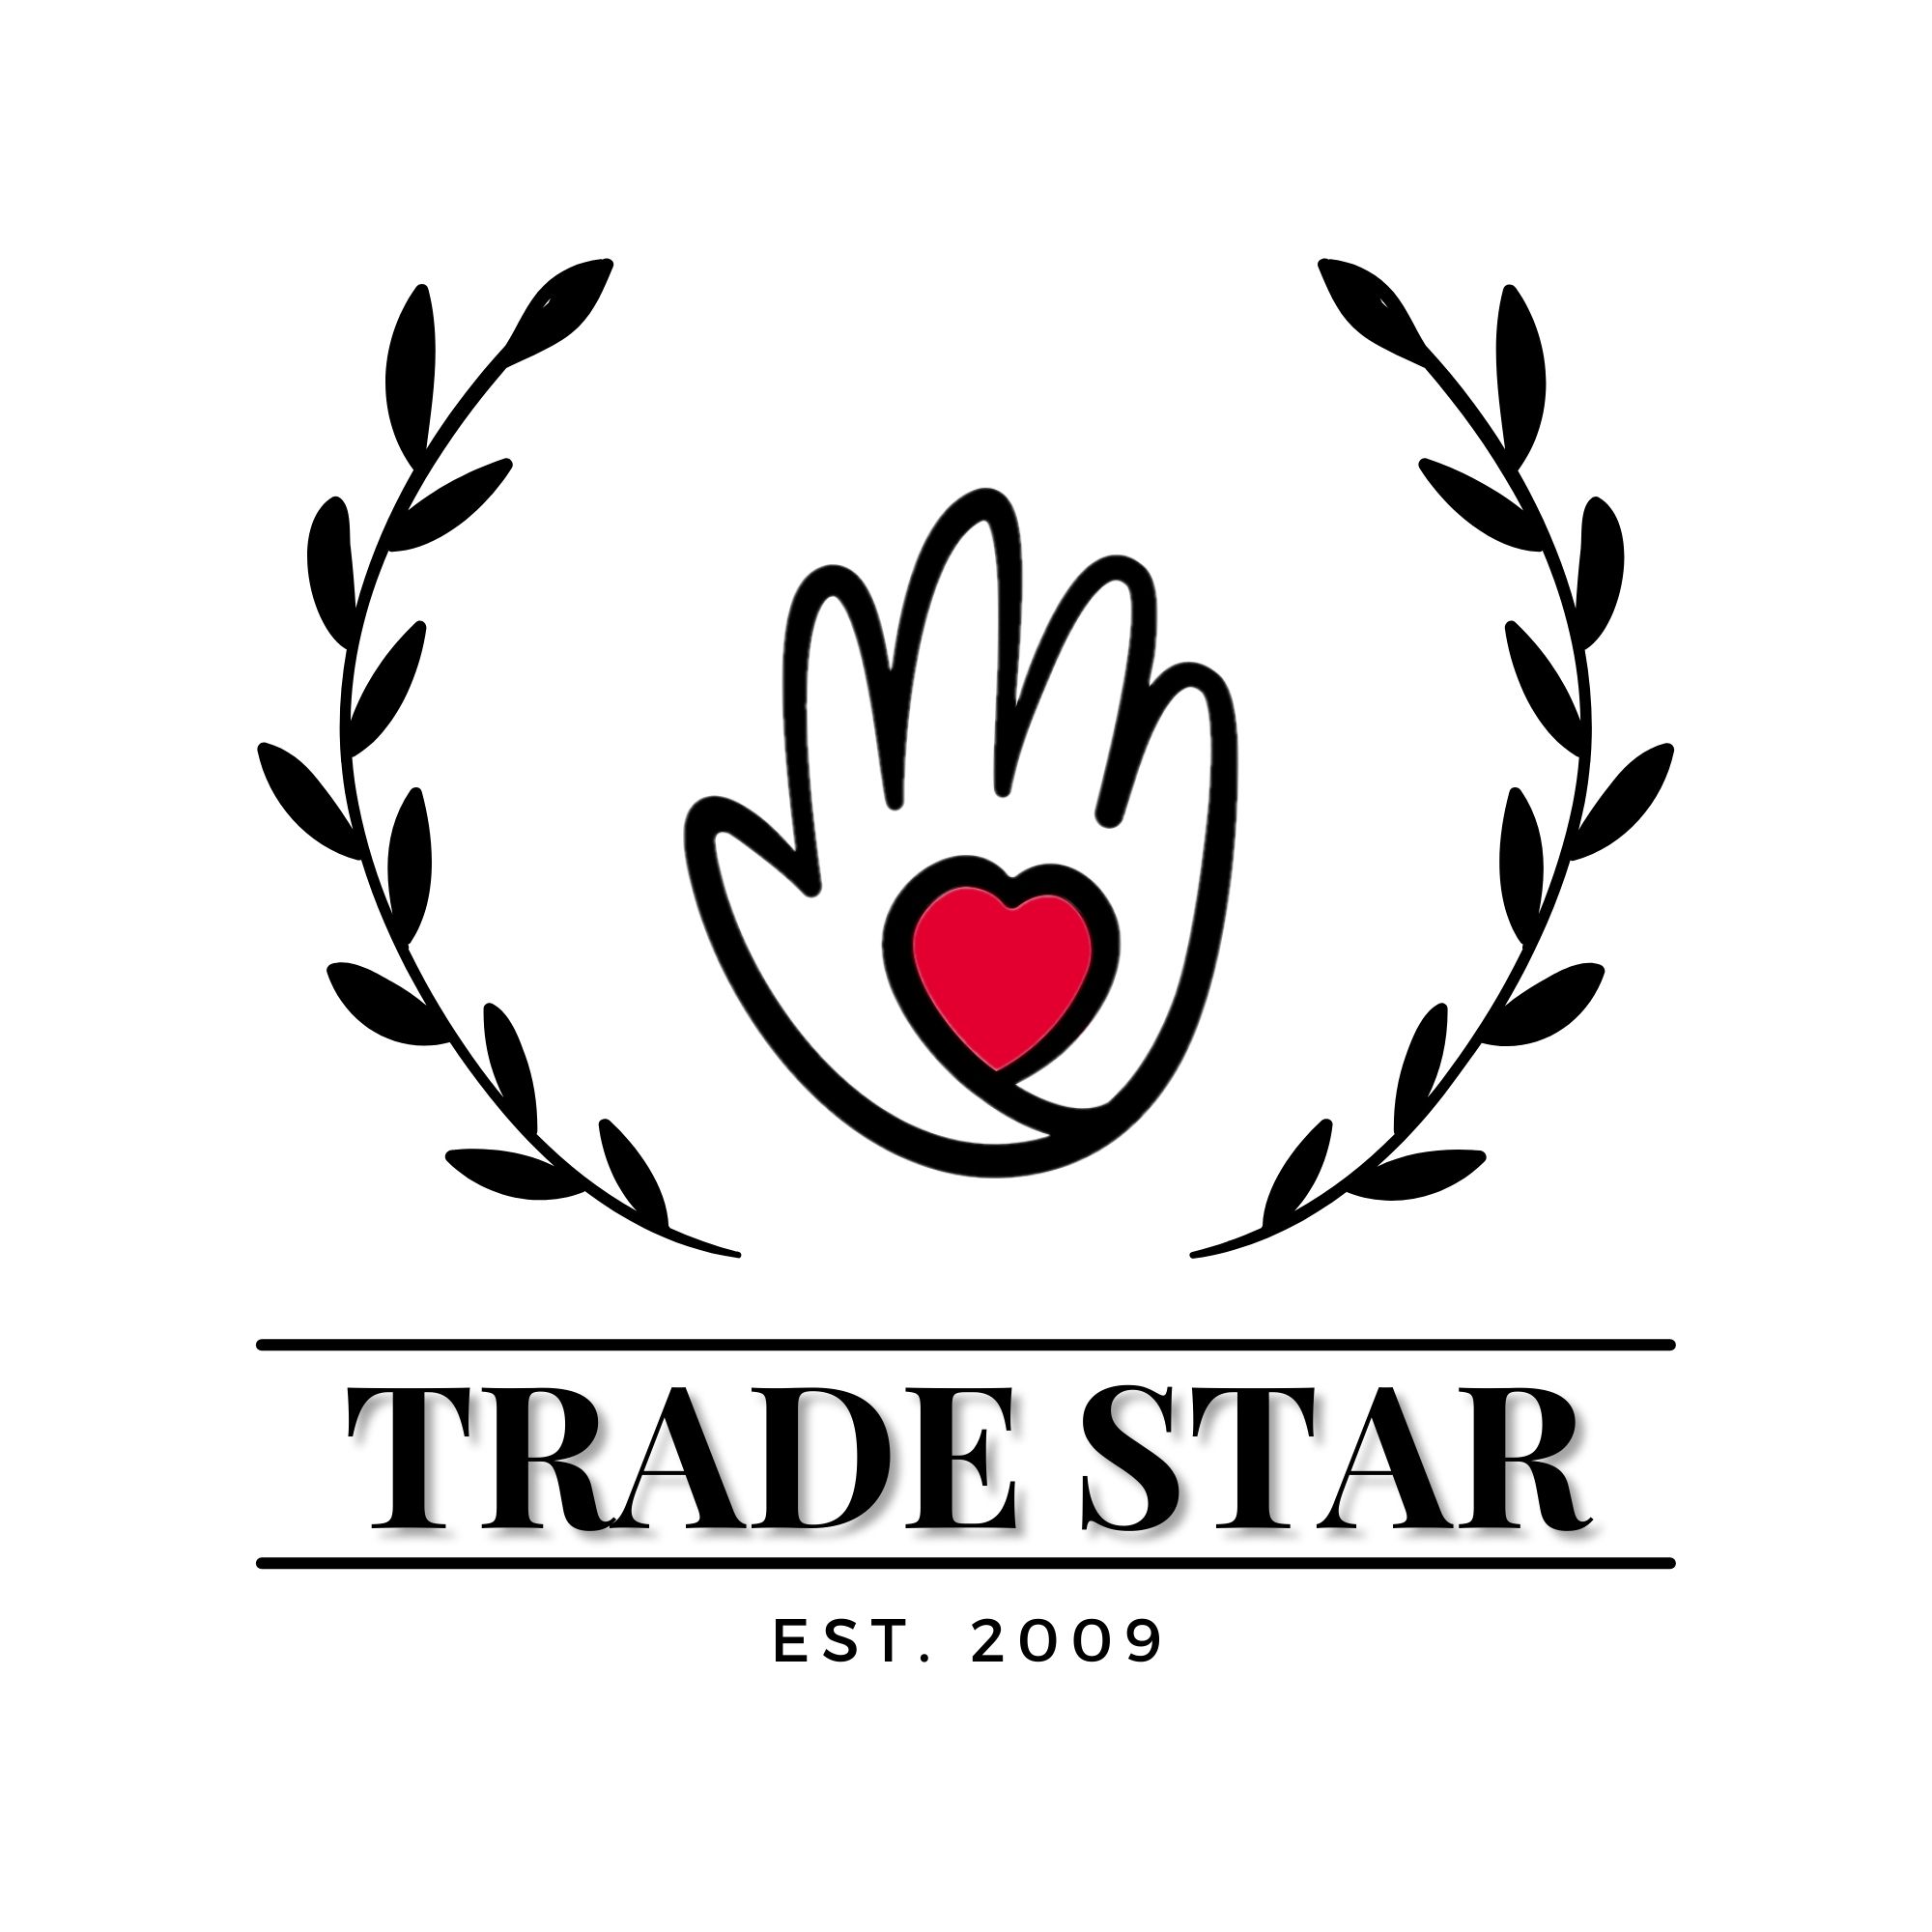 Trade Star Exports